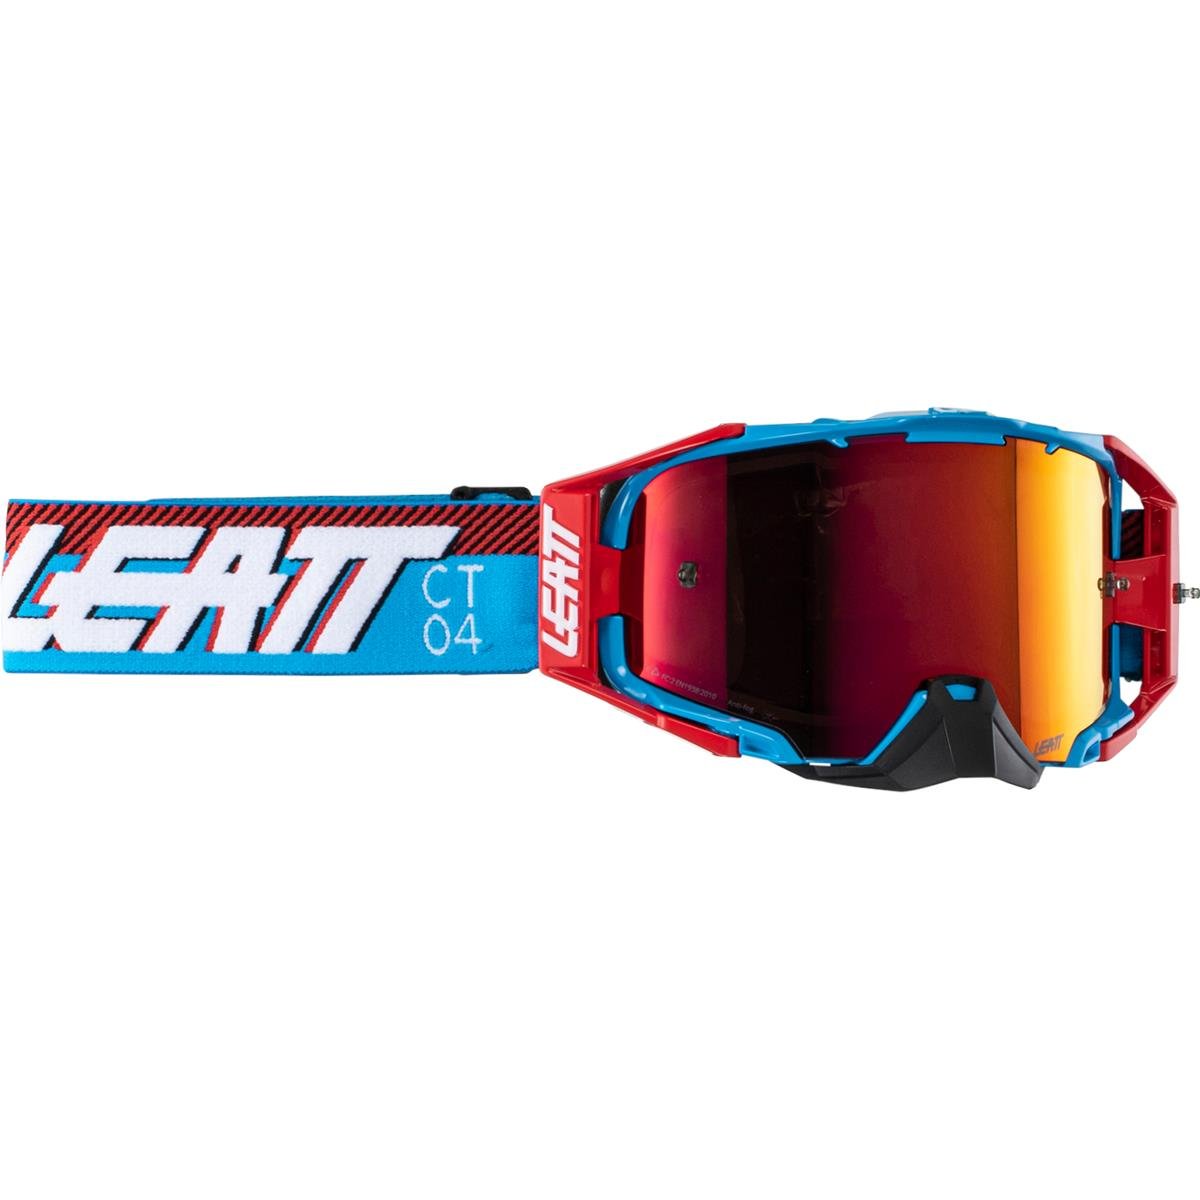 Leatt Crossbrille Velocity 6.5 IRIZ